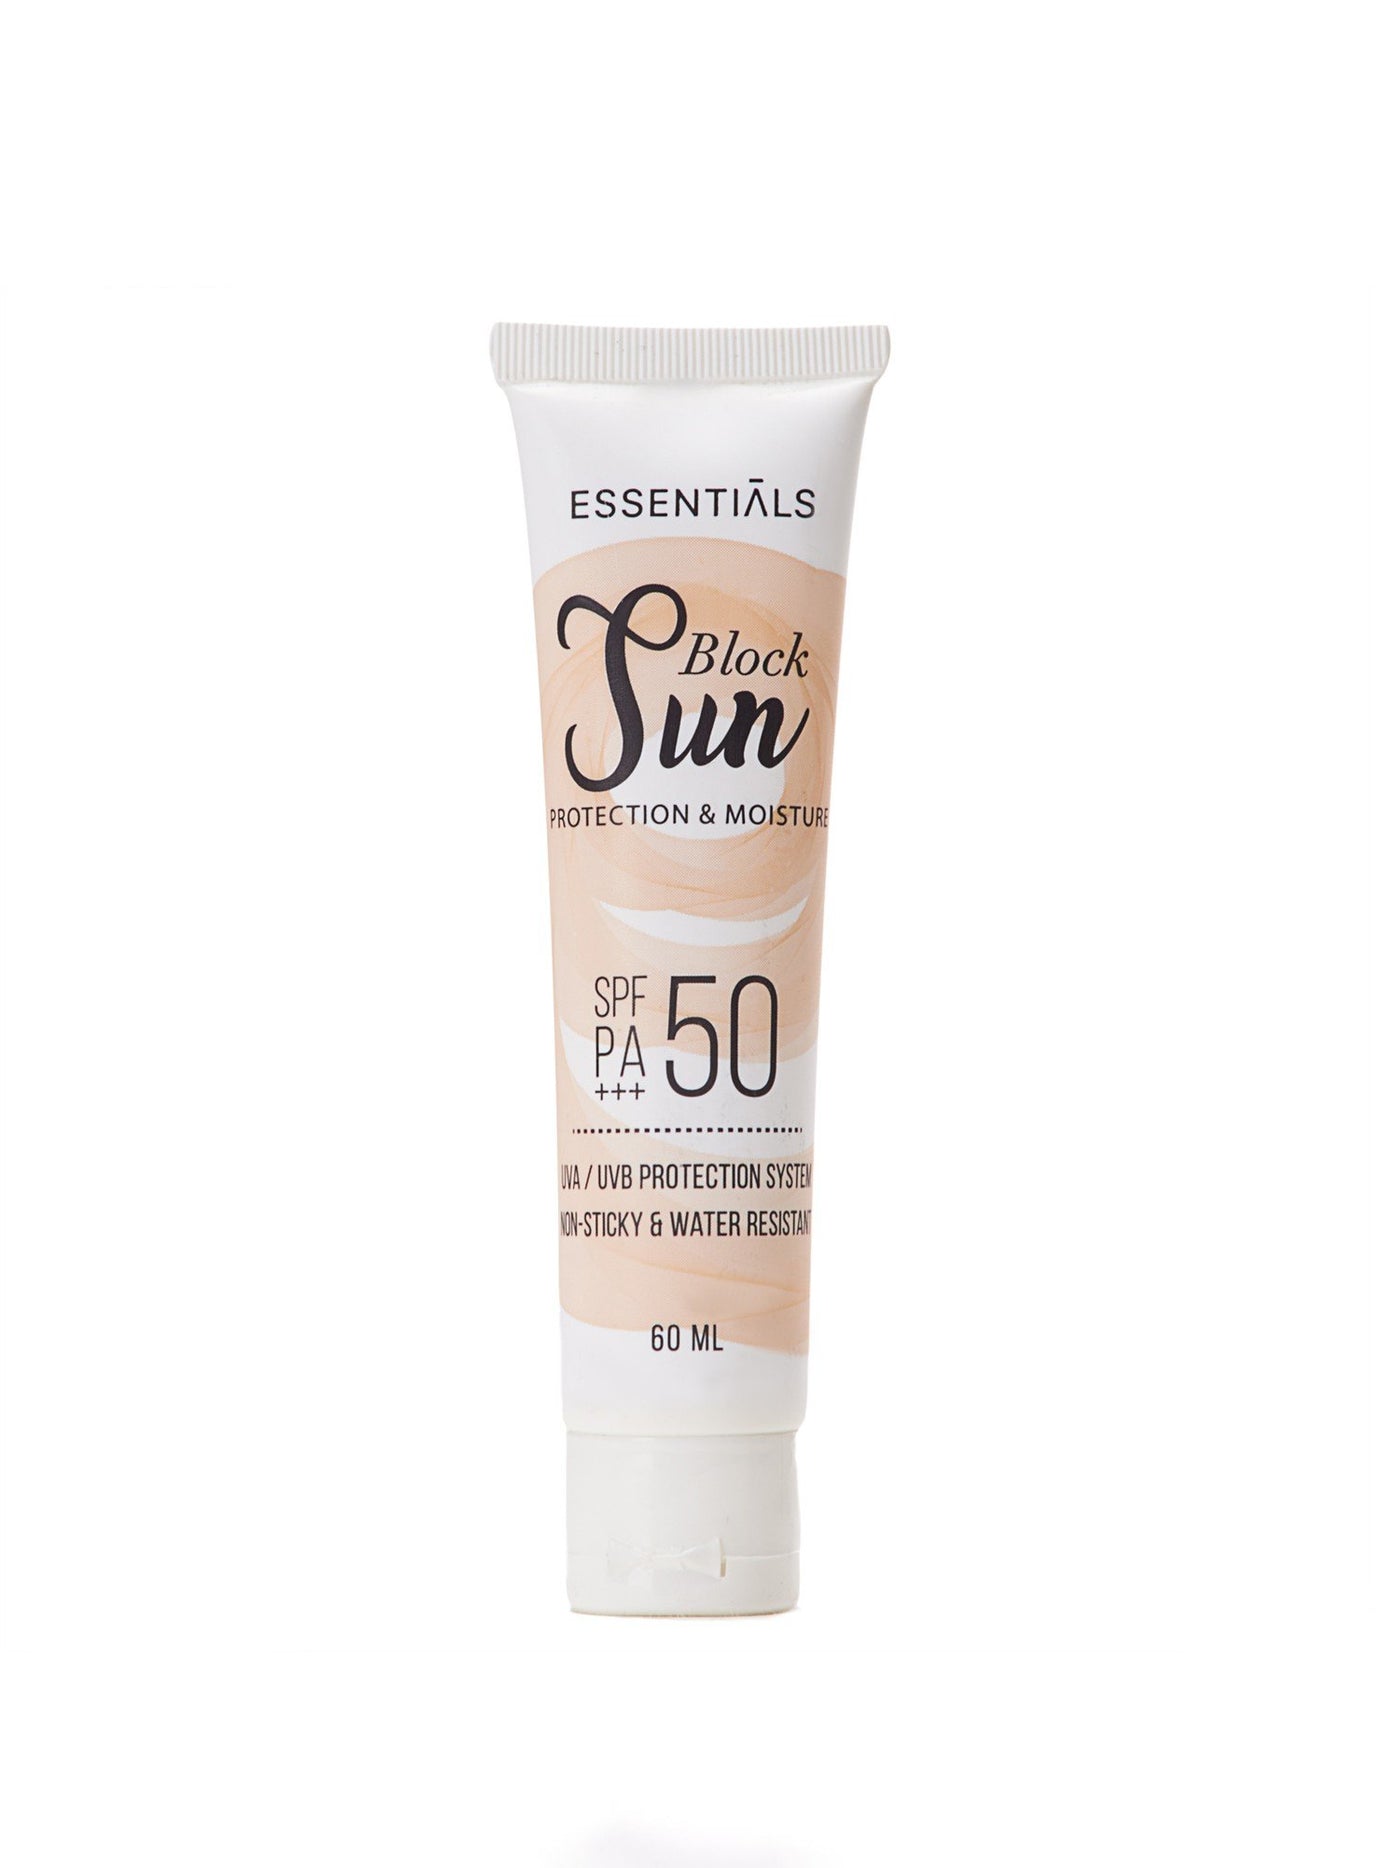 Essentials Sun Block SPF 50 PA+++ "Protection and Moisture" - 60 ML